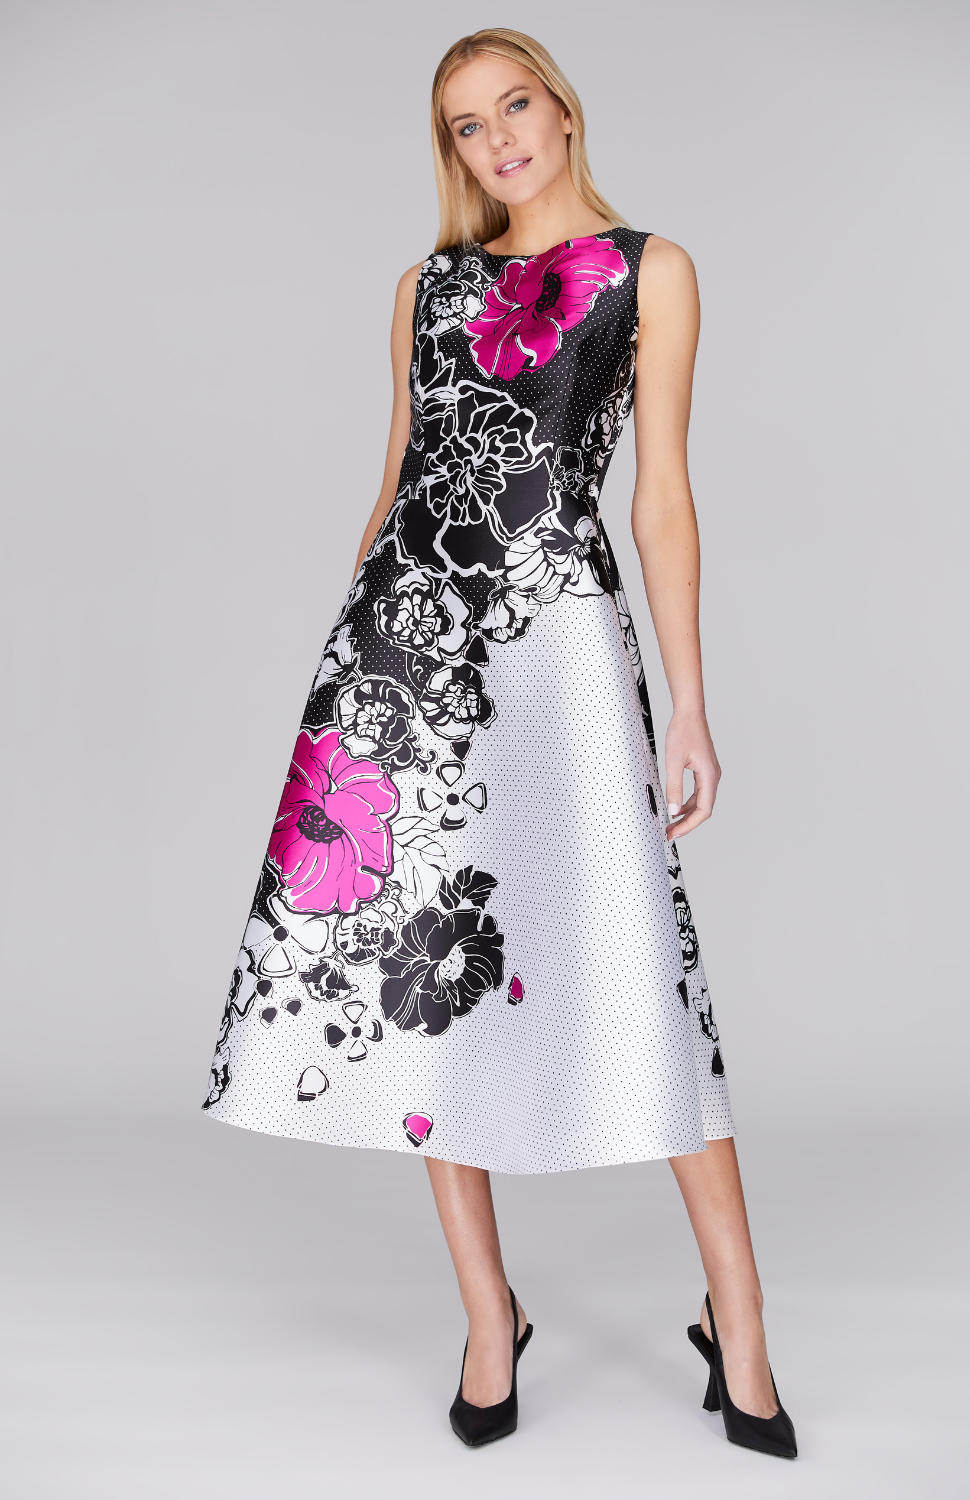 Floral Polka Dot Sleeveless Fit & Flare Dress